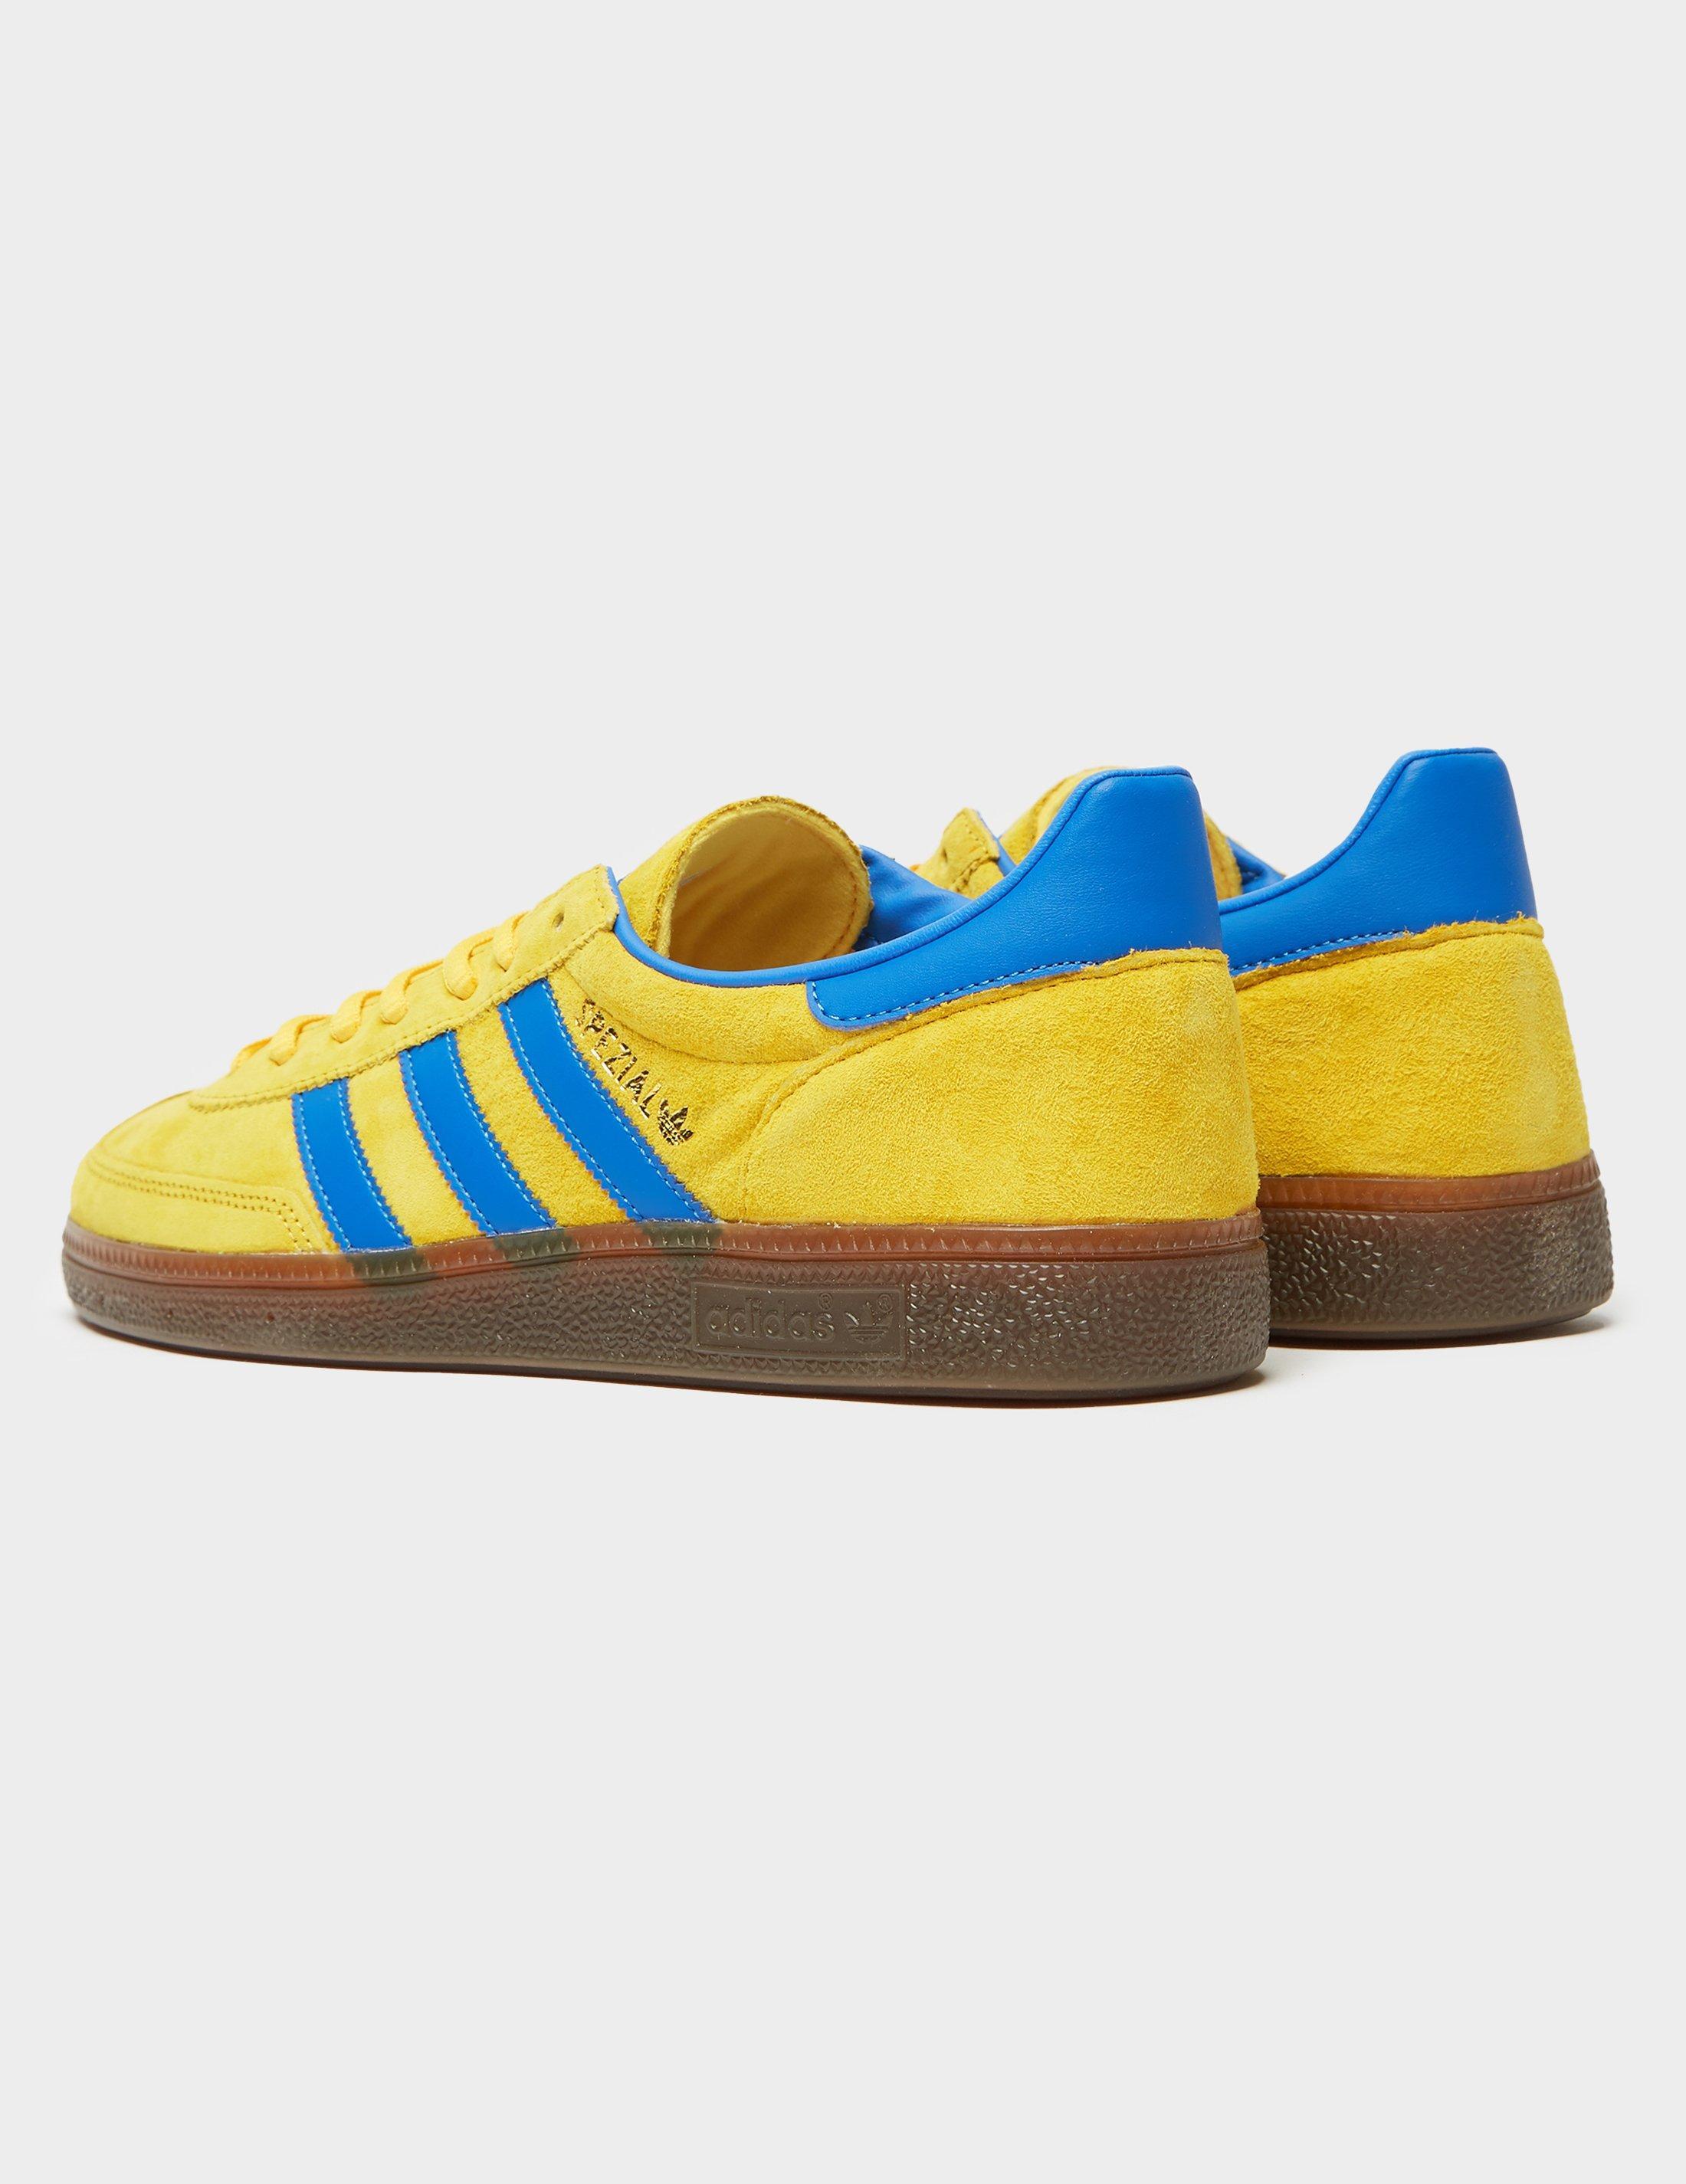 adidas spezial blue yellow